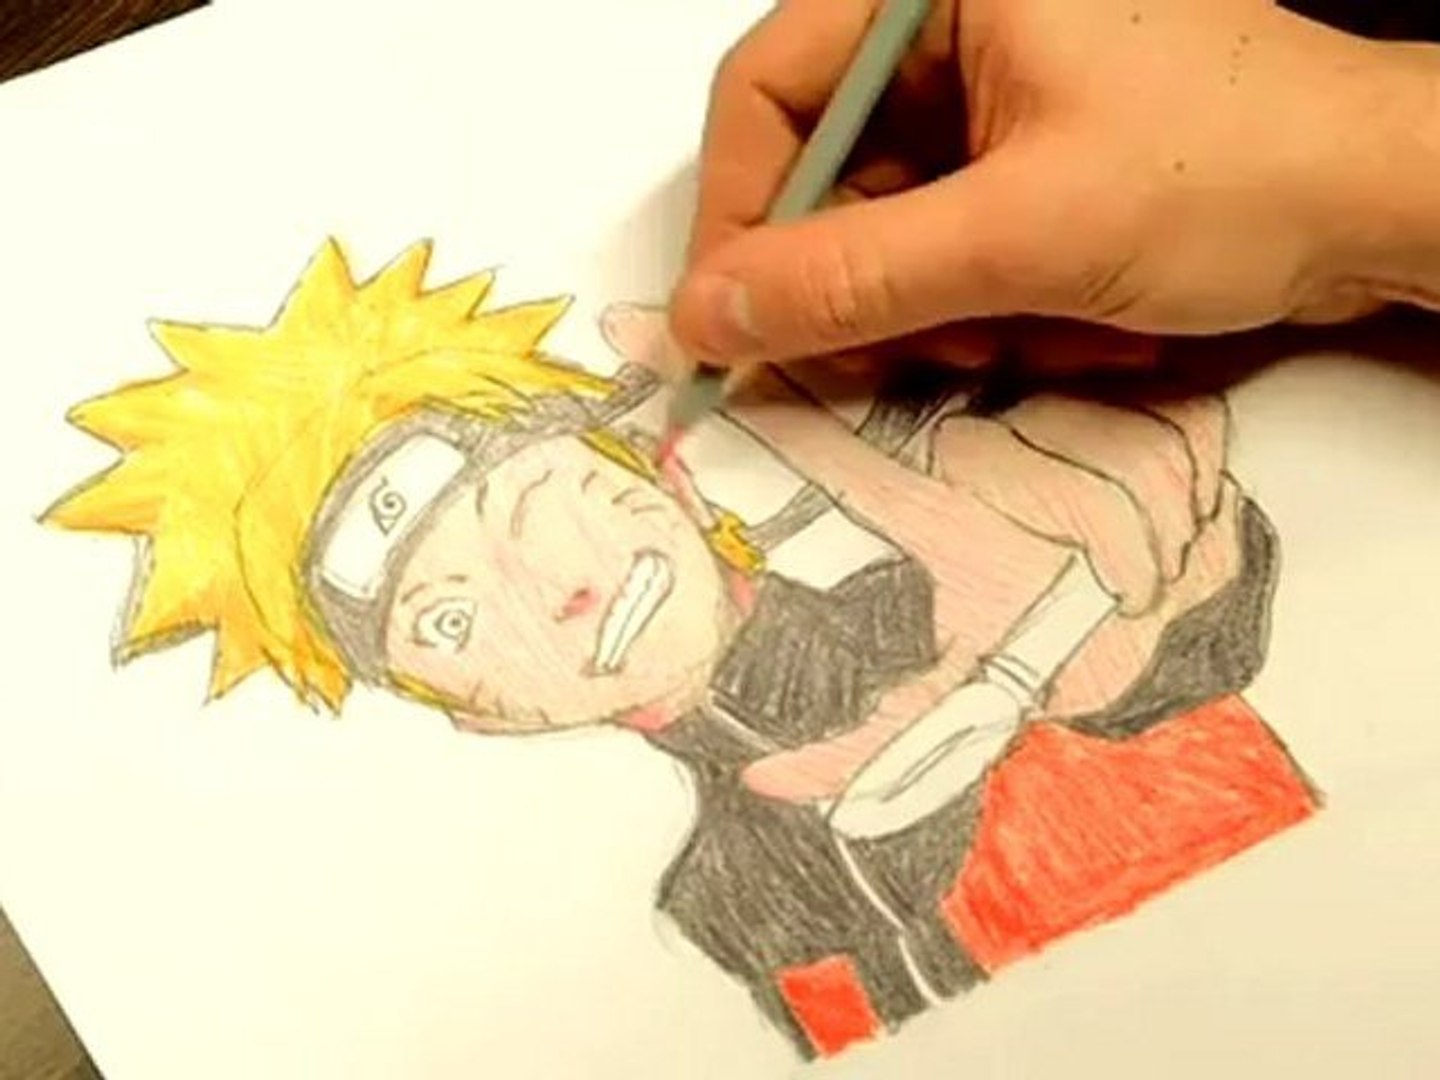 Anime Drawing, How to Draw Naruto Uzumaki